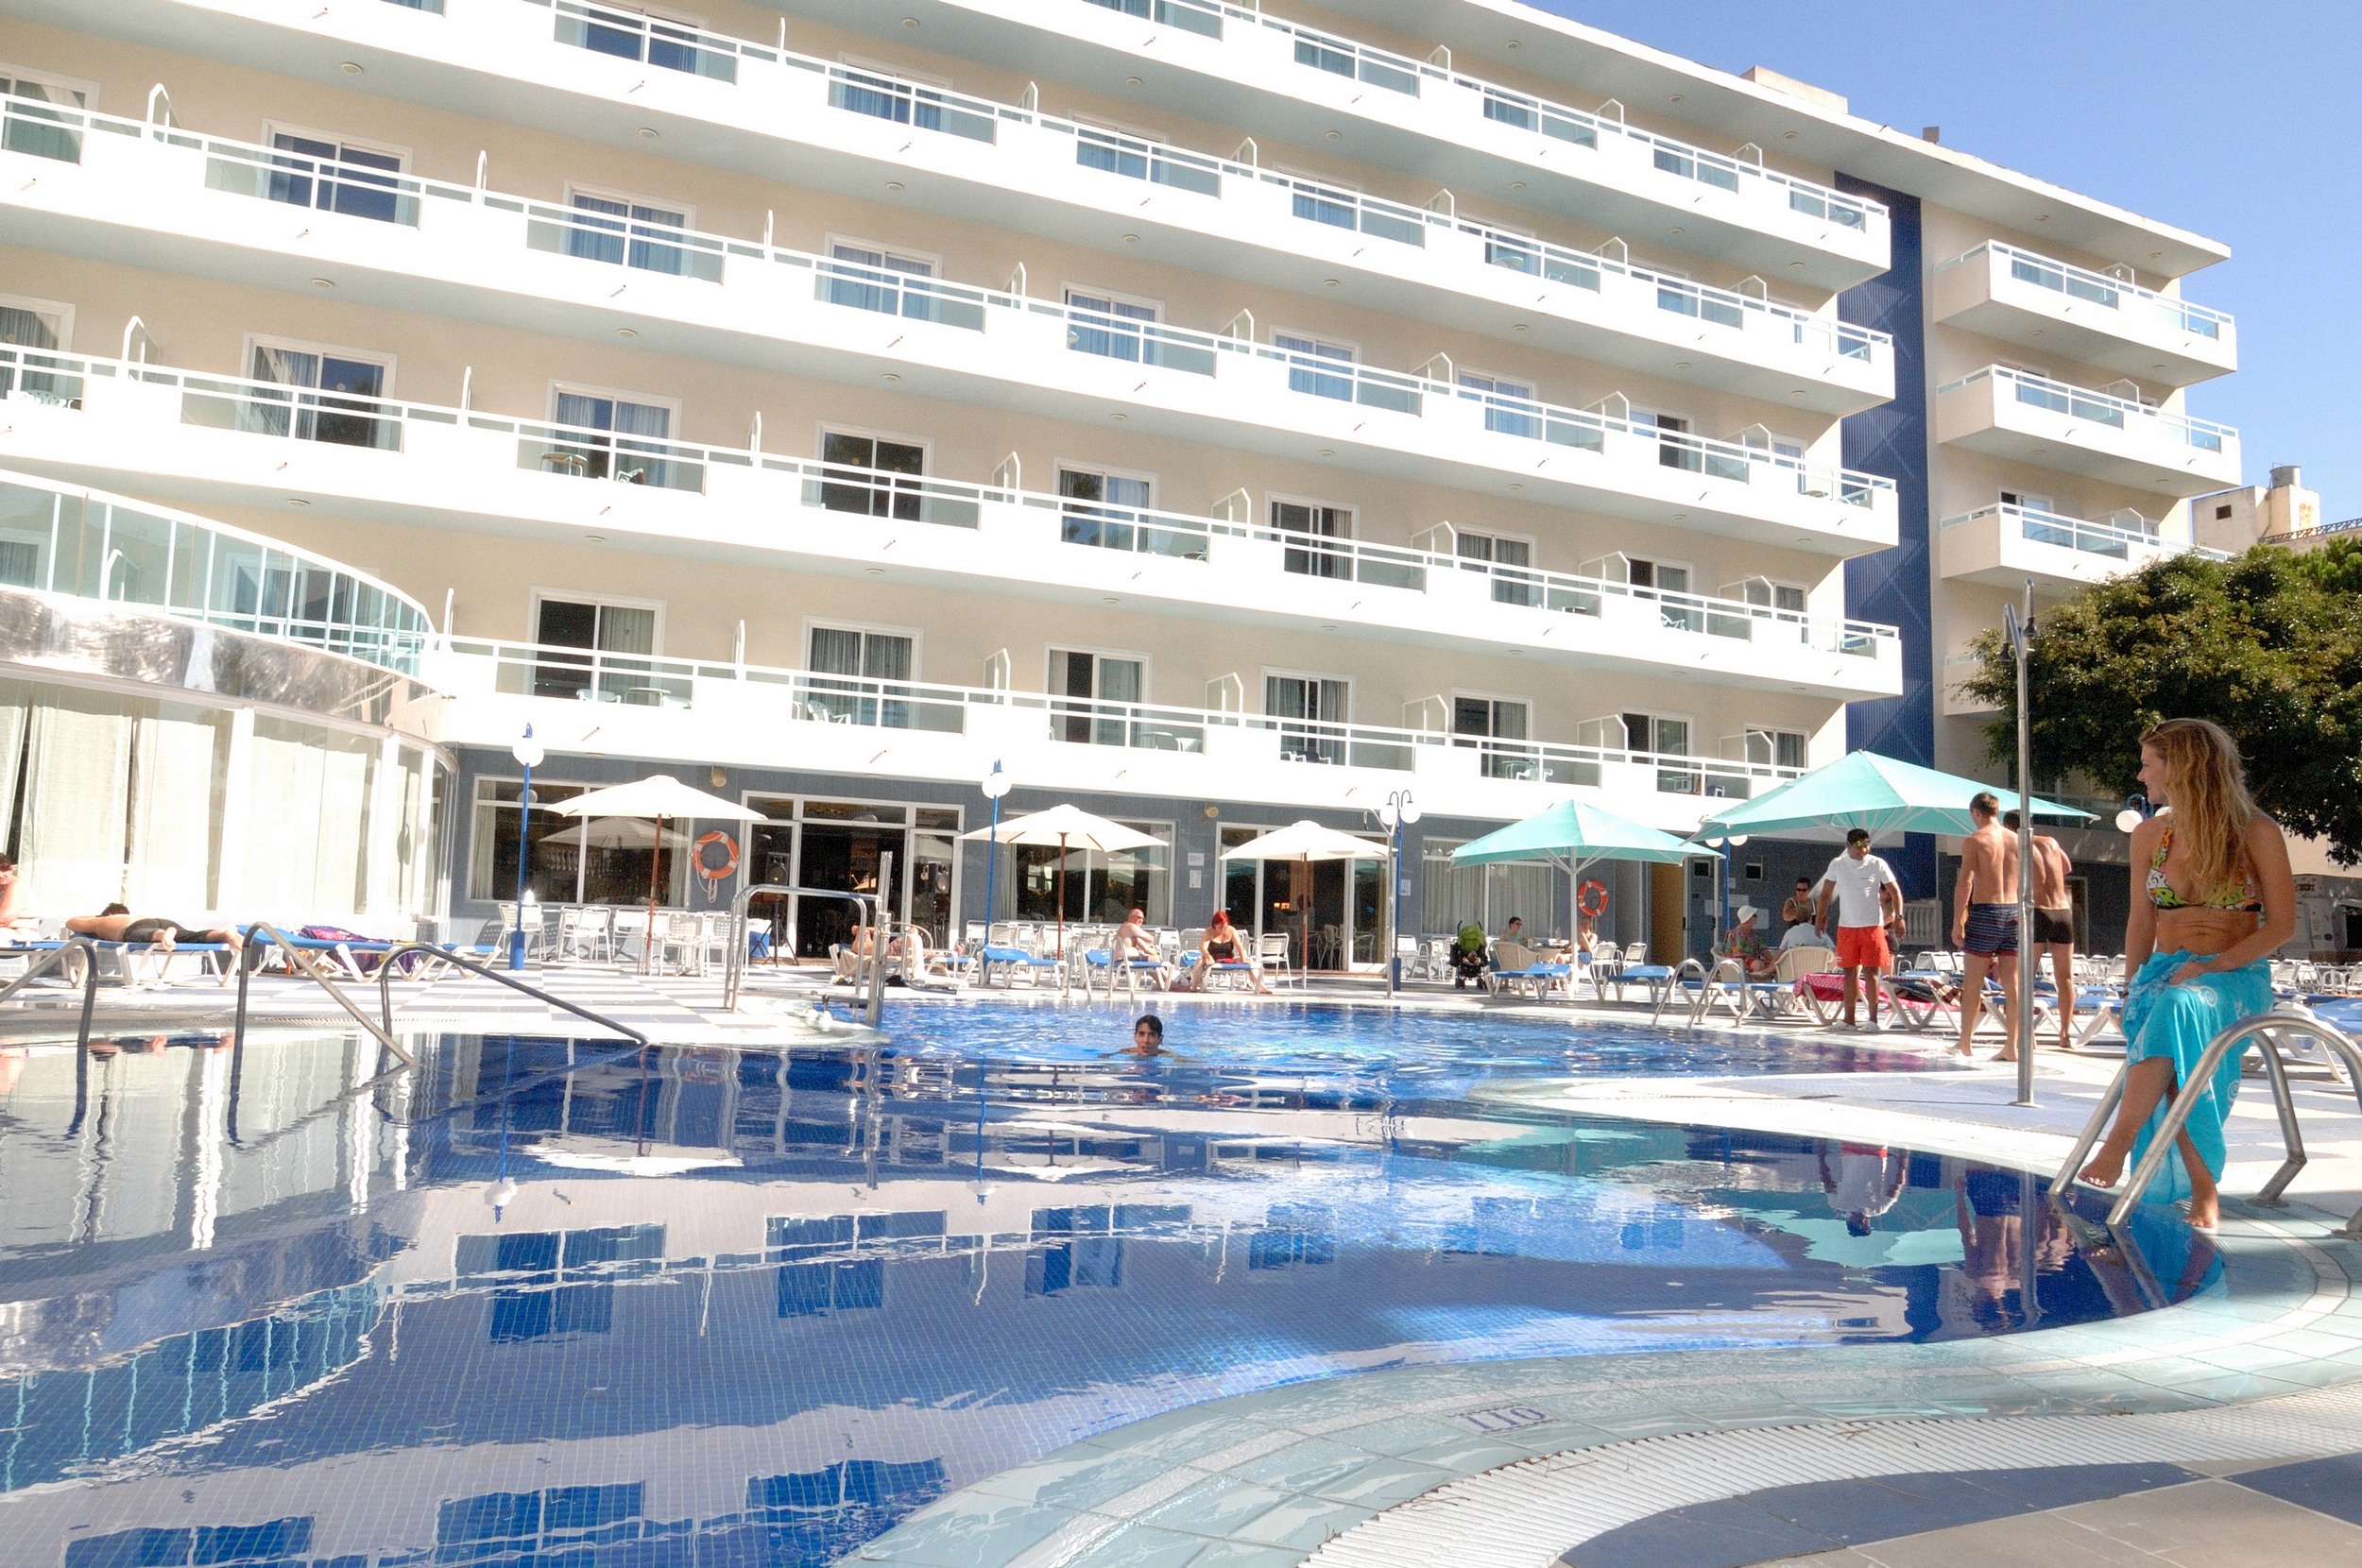 Hotel Santa Monica Playa - Hiszpania